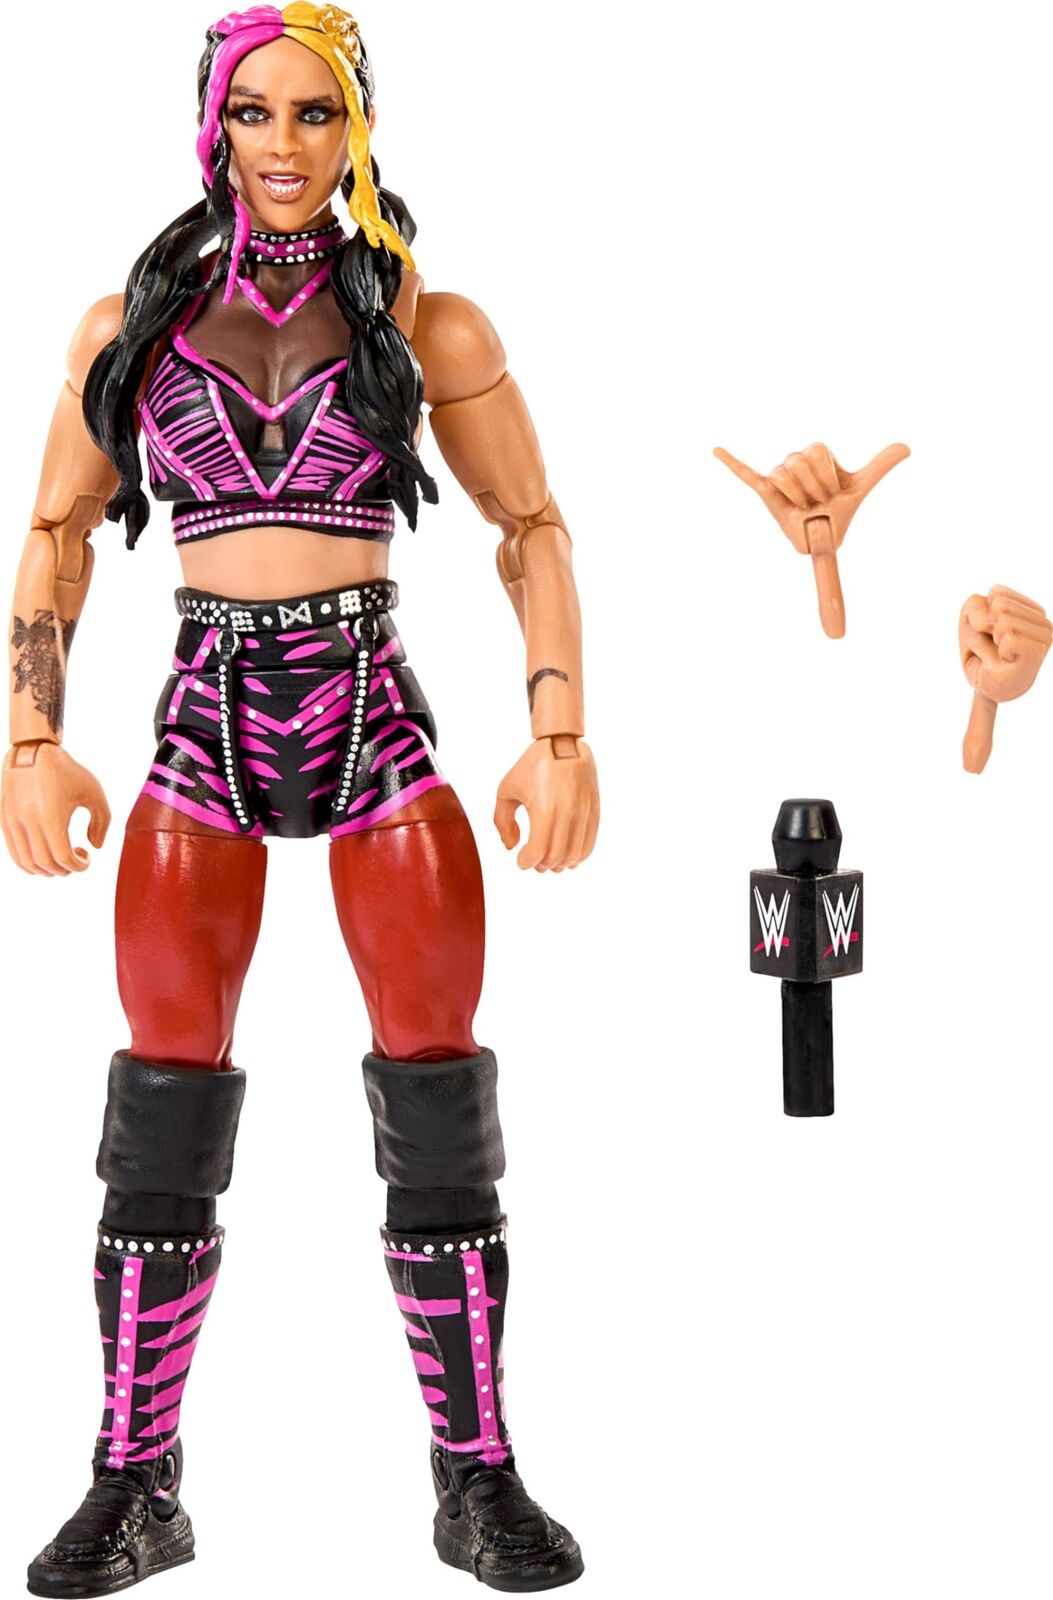 Mattel WWE Dakota Kai Elite Collection Action Figure with Accessories, Articulat